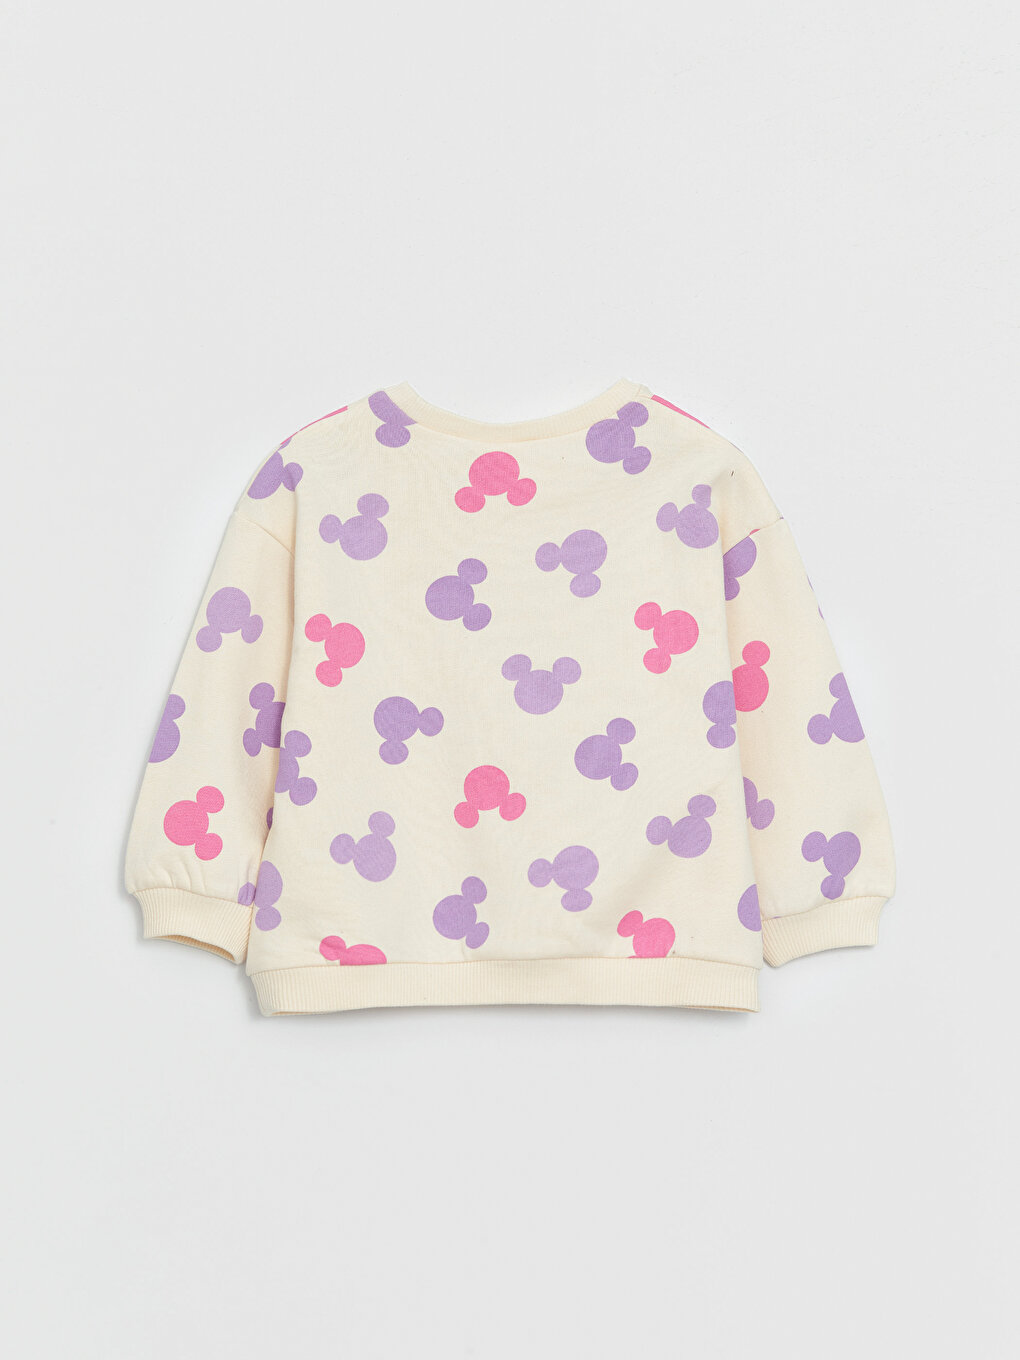 Crew Neck Long Sleeved Minnie Mouse Printed Baby Girl Sweatshirt